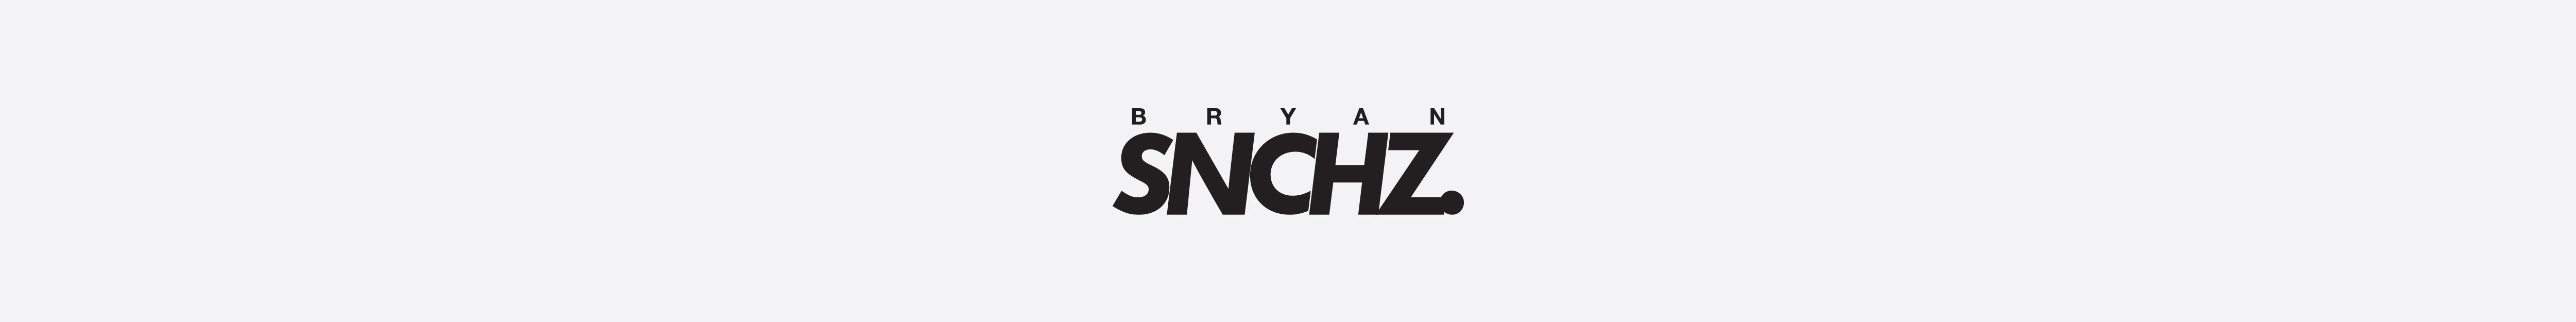 Banner profilu uživatele BRYAN SANCHEZ